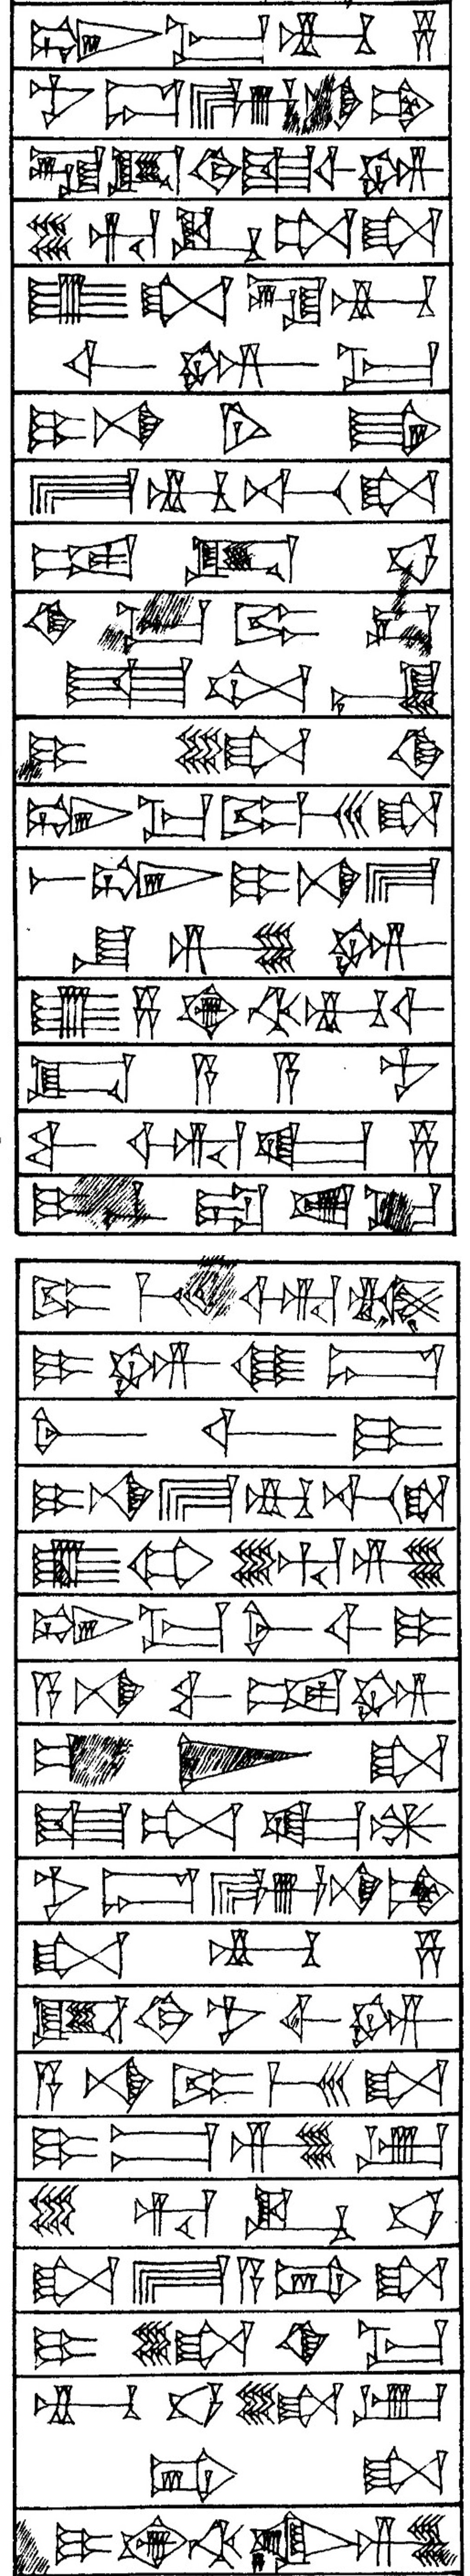 Law § 172 - Cuneiform - Law Code of Hammurabi